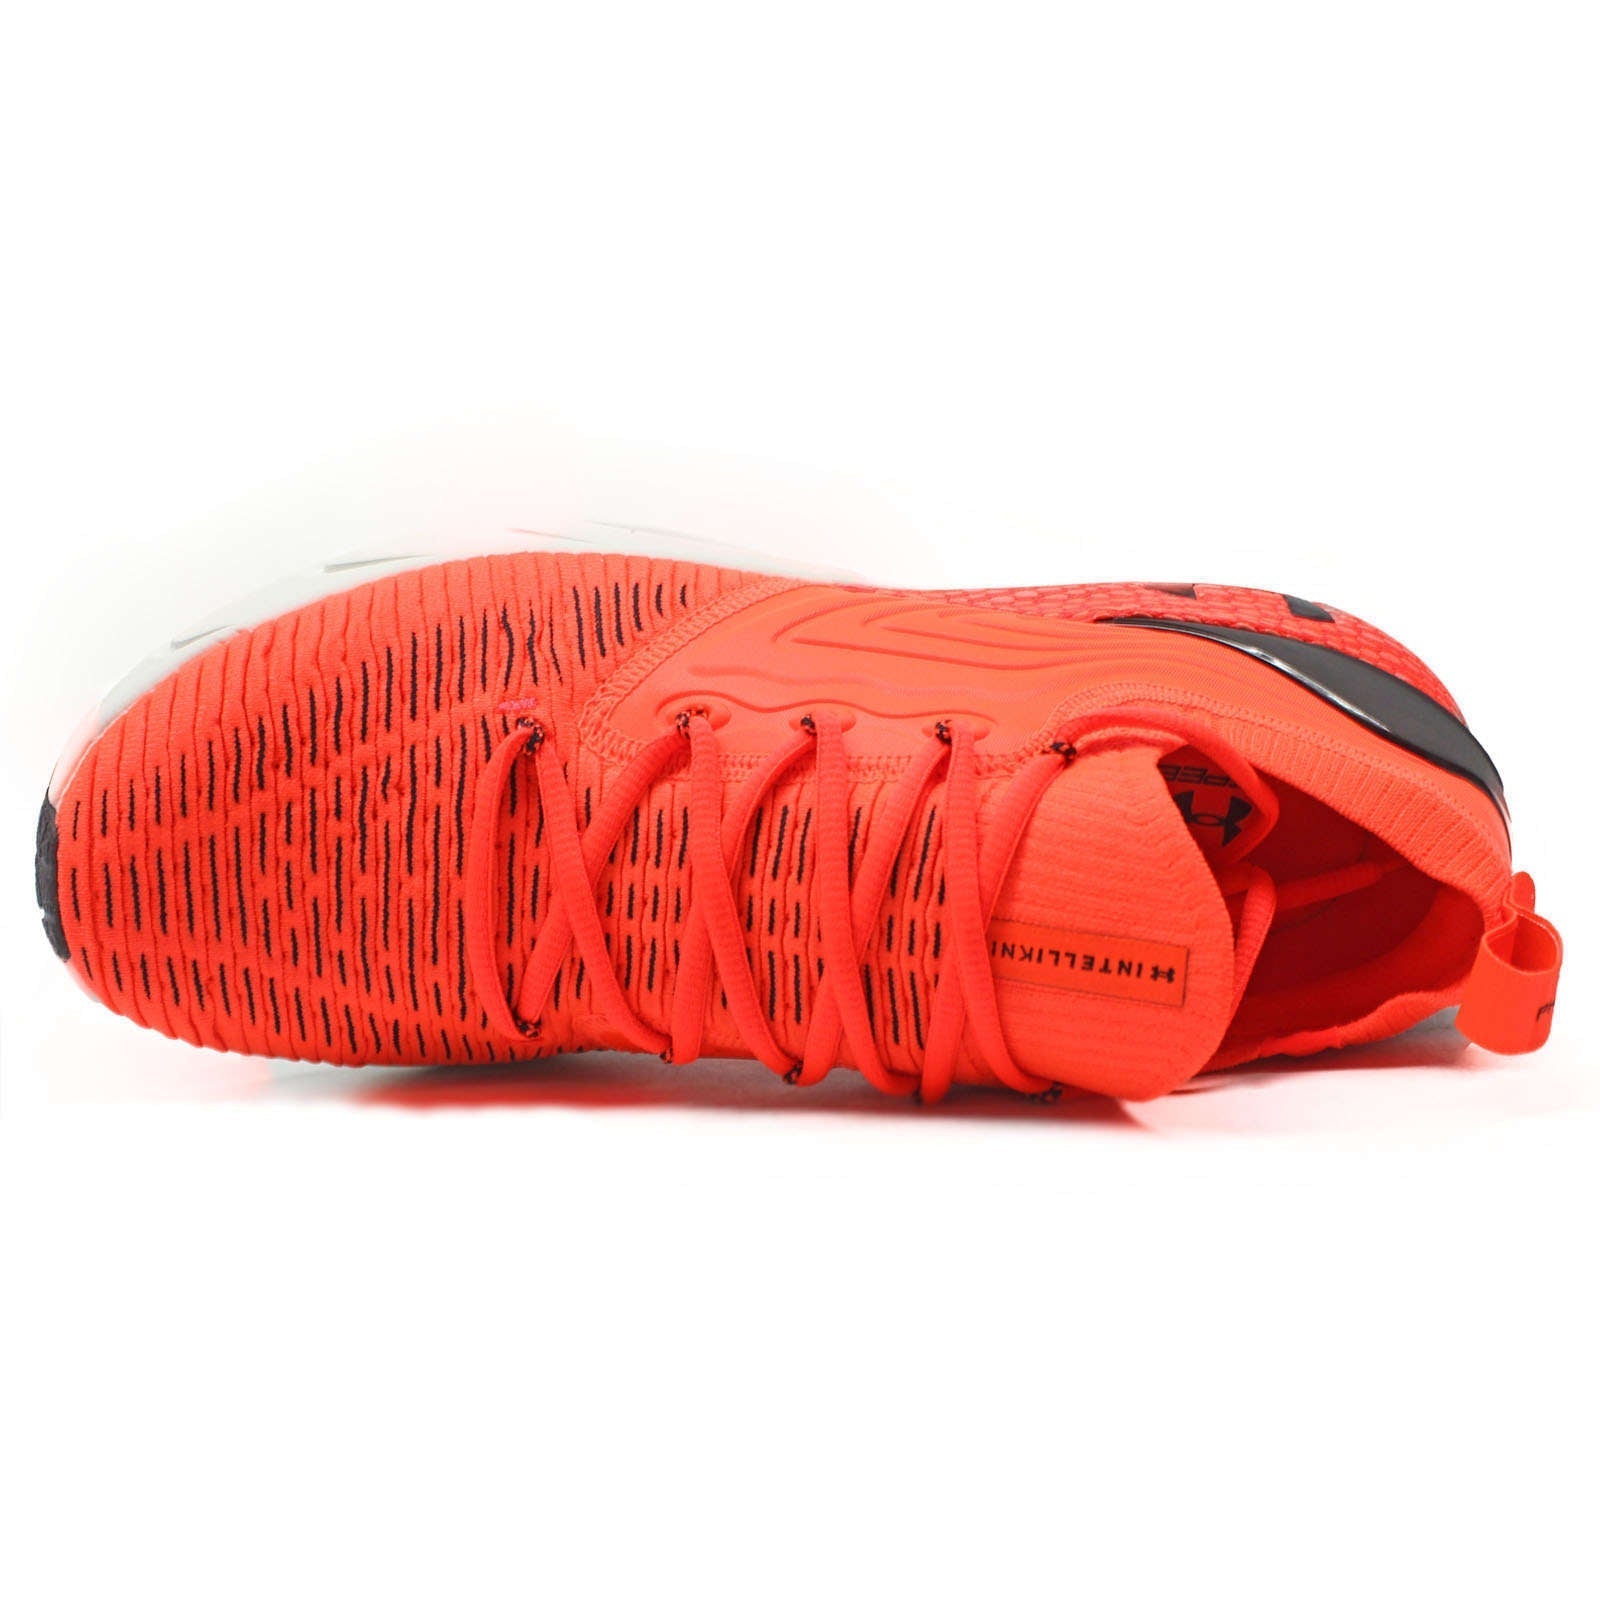 Under Armour HOVR Phantom 2 INKNT Synthetic Textile Men's Low-Top Sneakers#color_orange orange